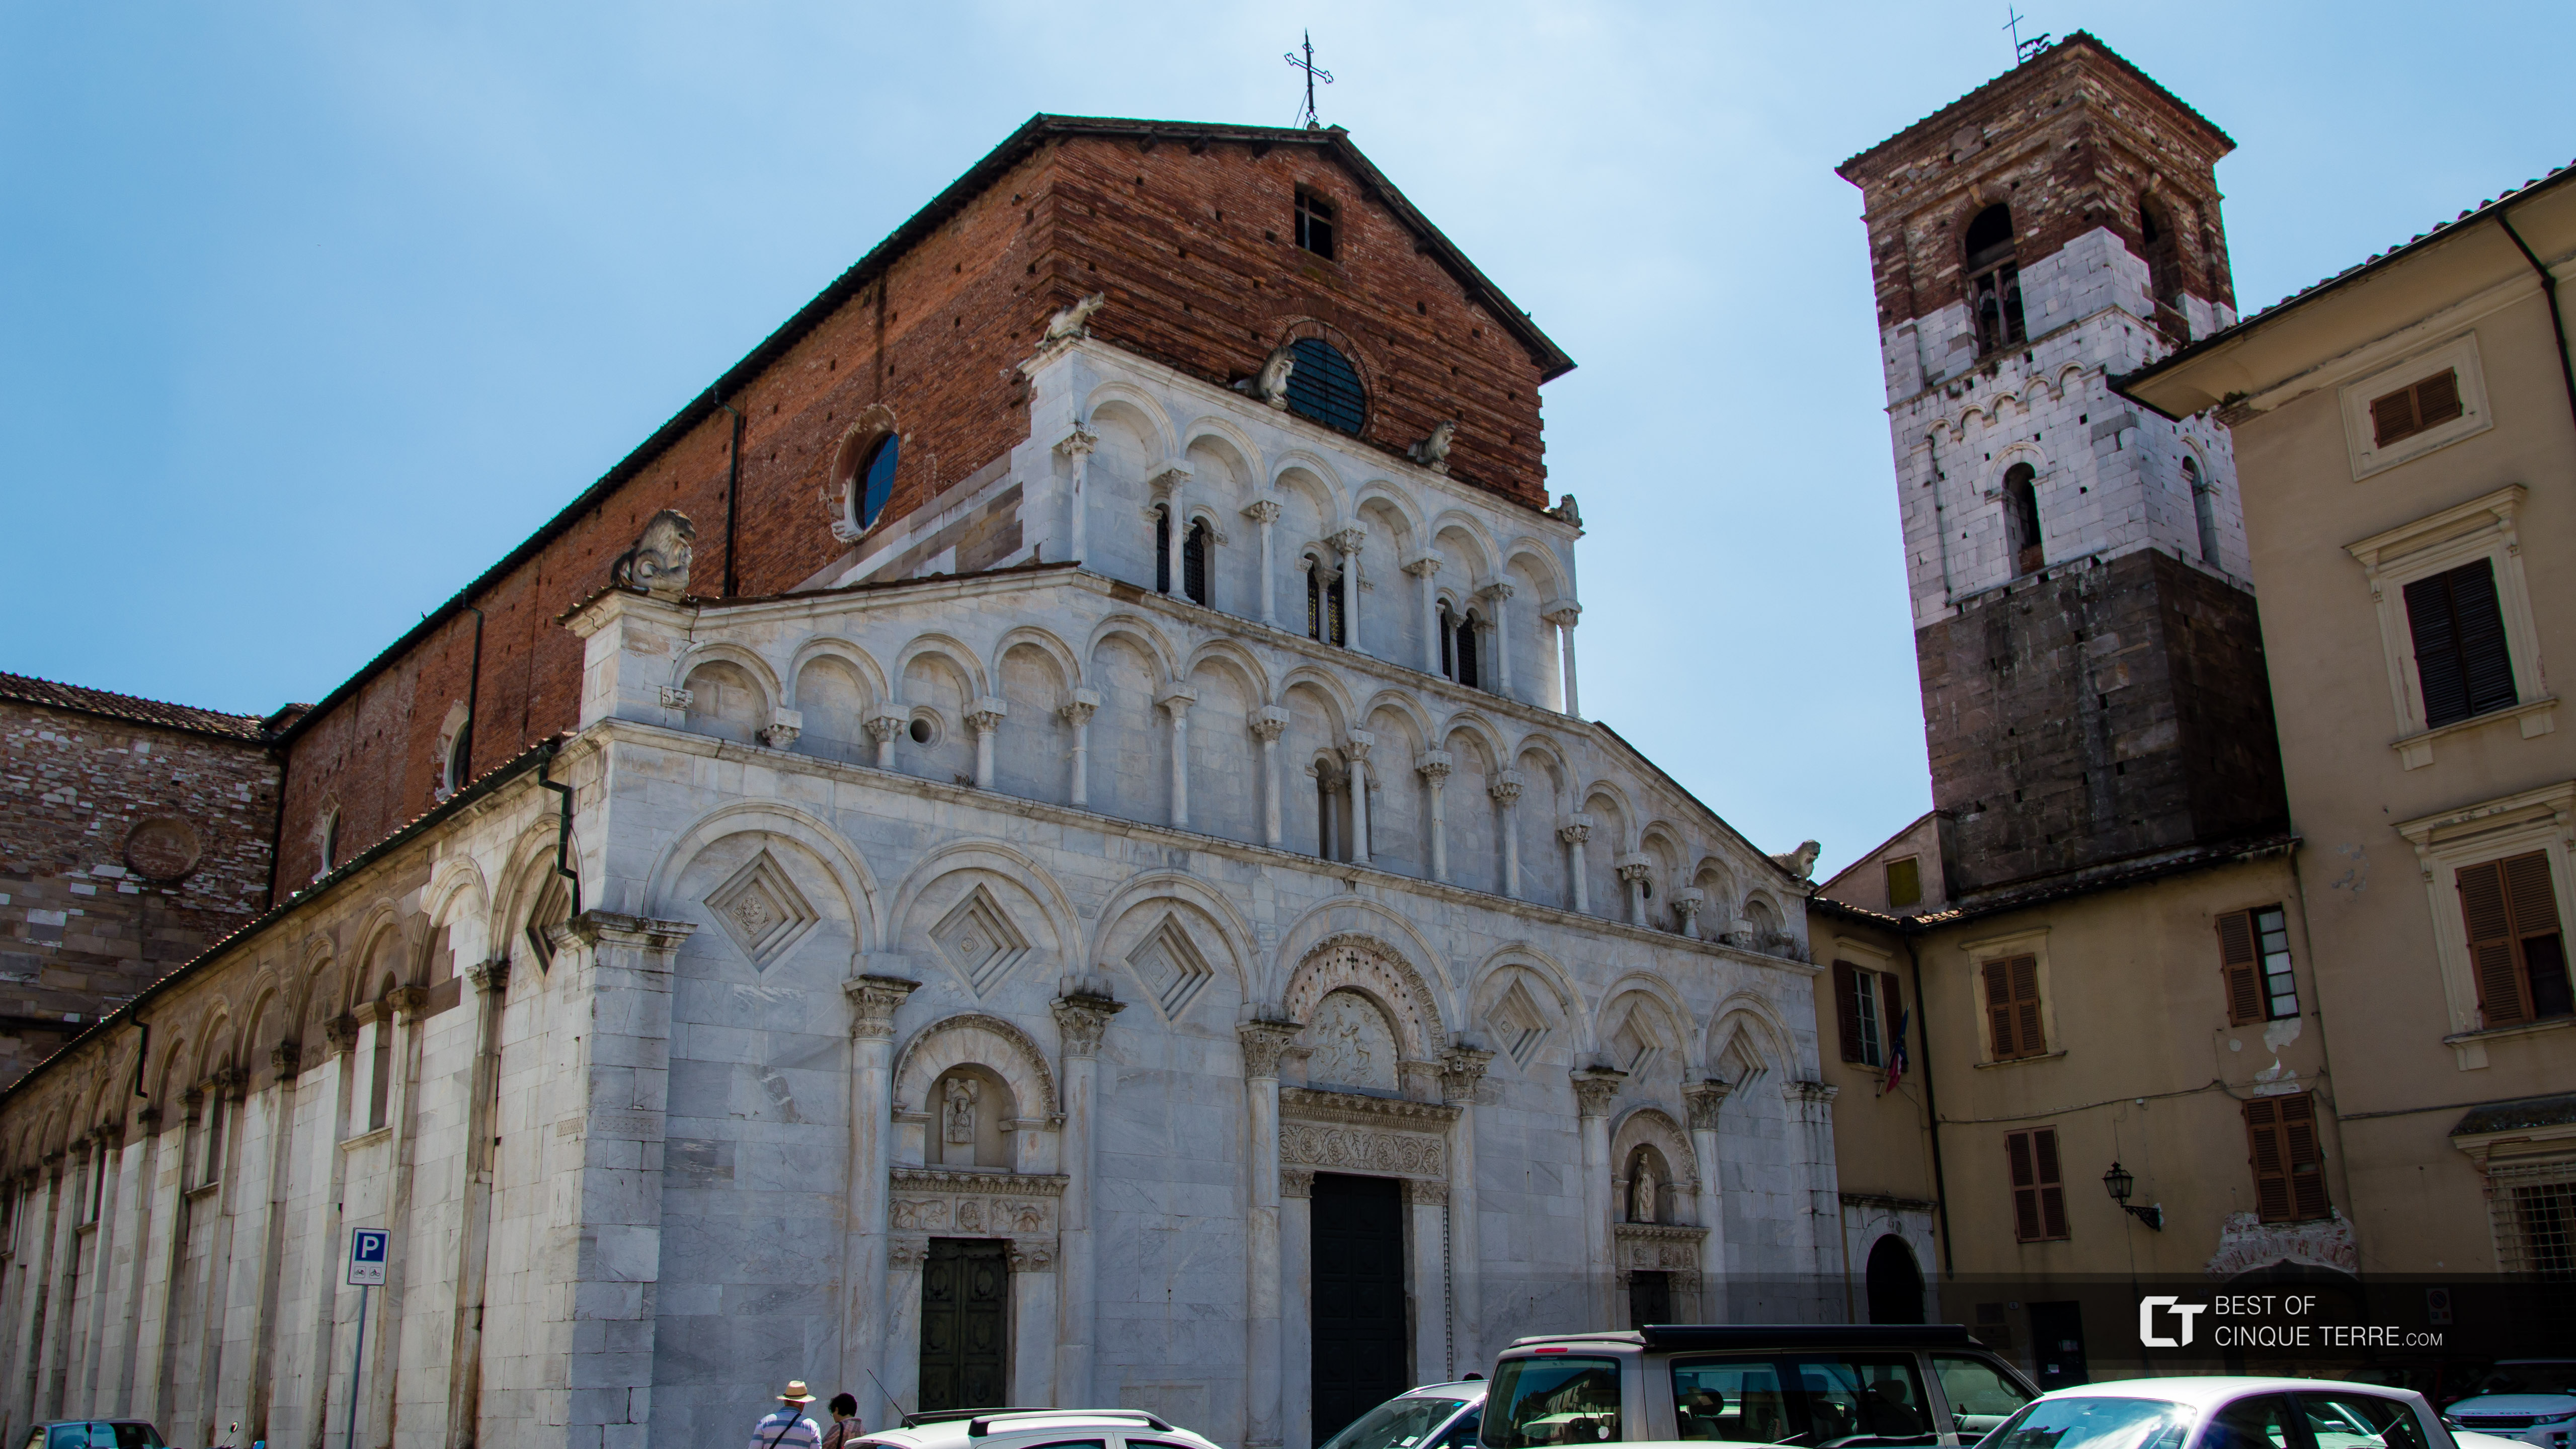 Iglesia de Santa María Forisportam, Lucca, Italia